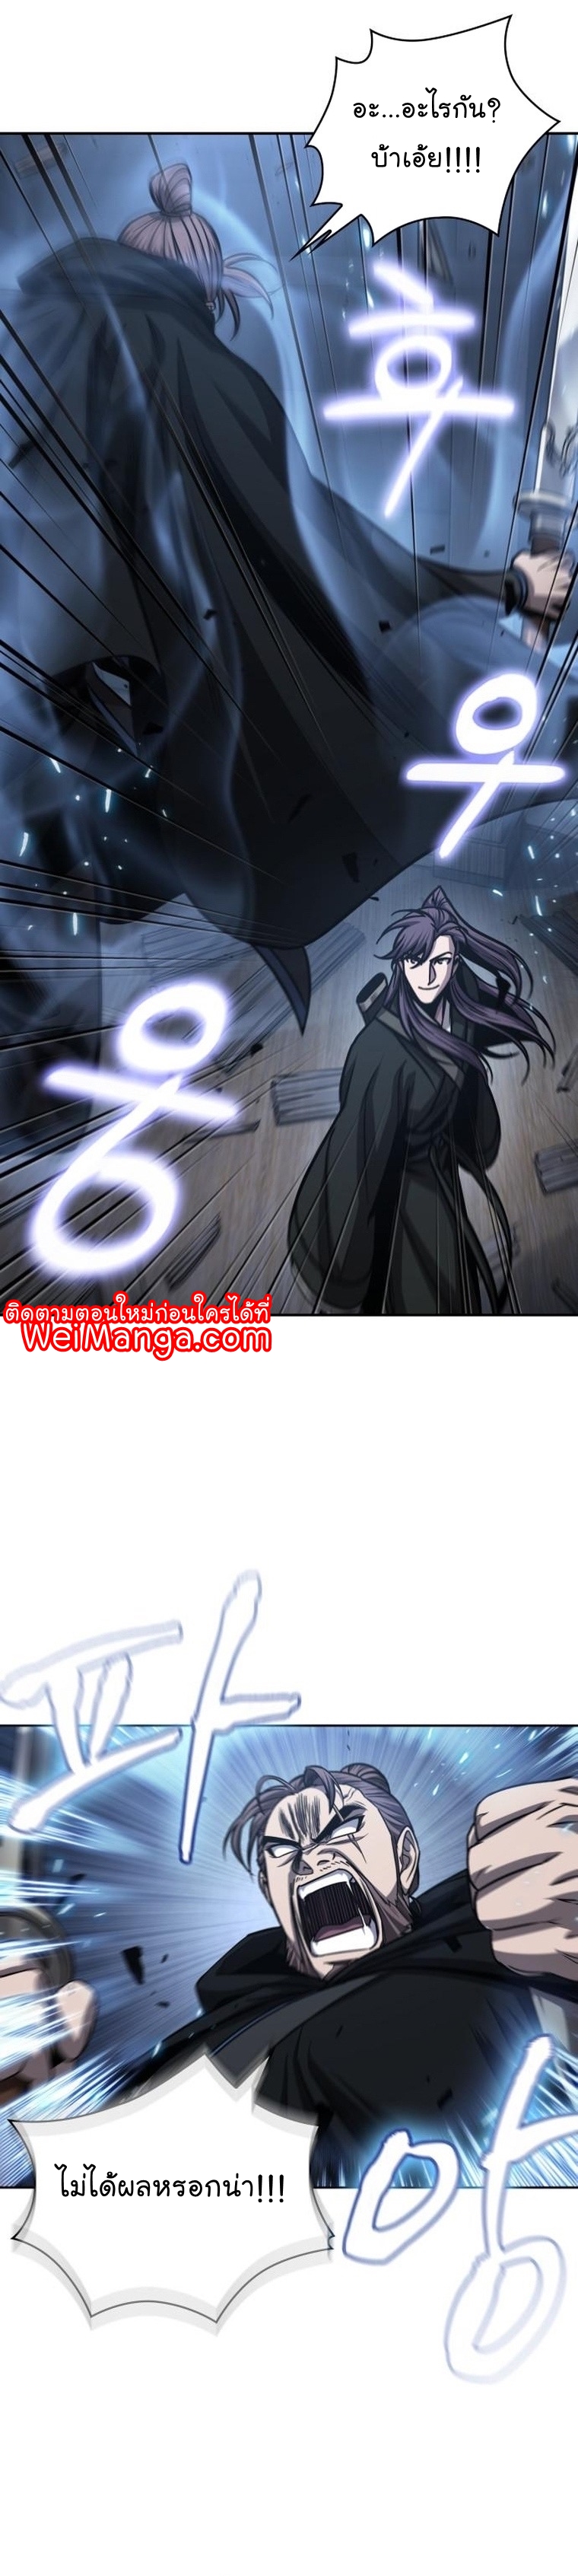 Nano Machine Wei Manga Manwha 163 (24)